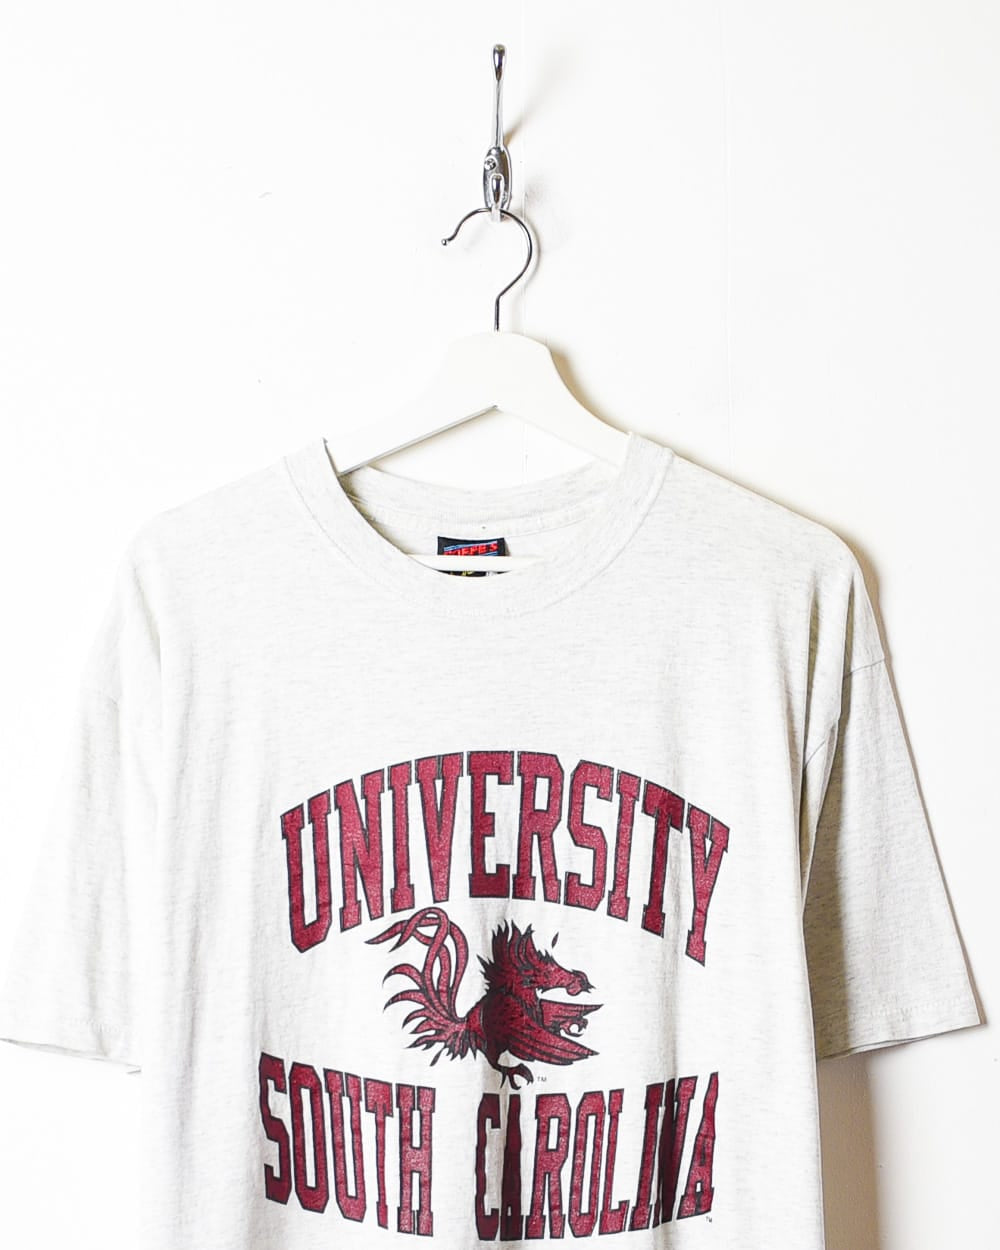 Stone South Carolina University Single Stitch T-Shirt - Large